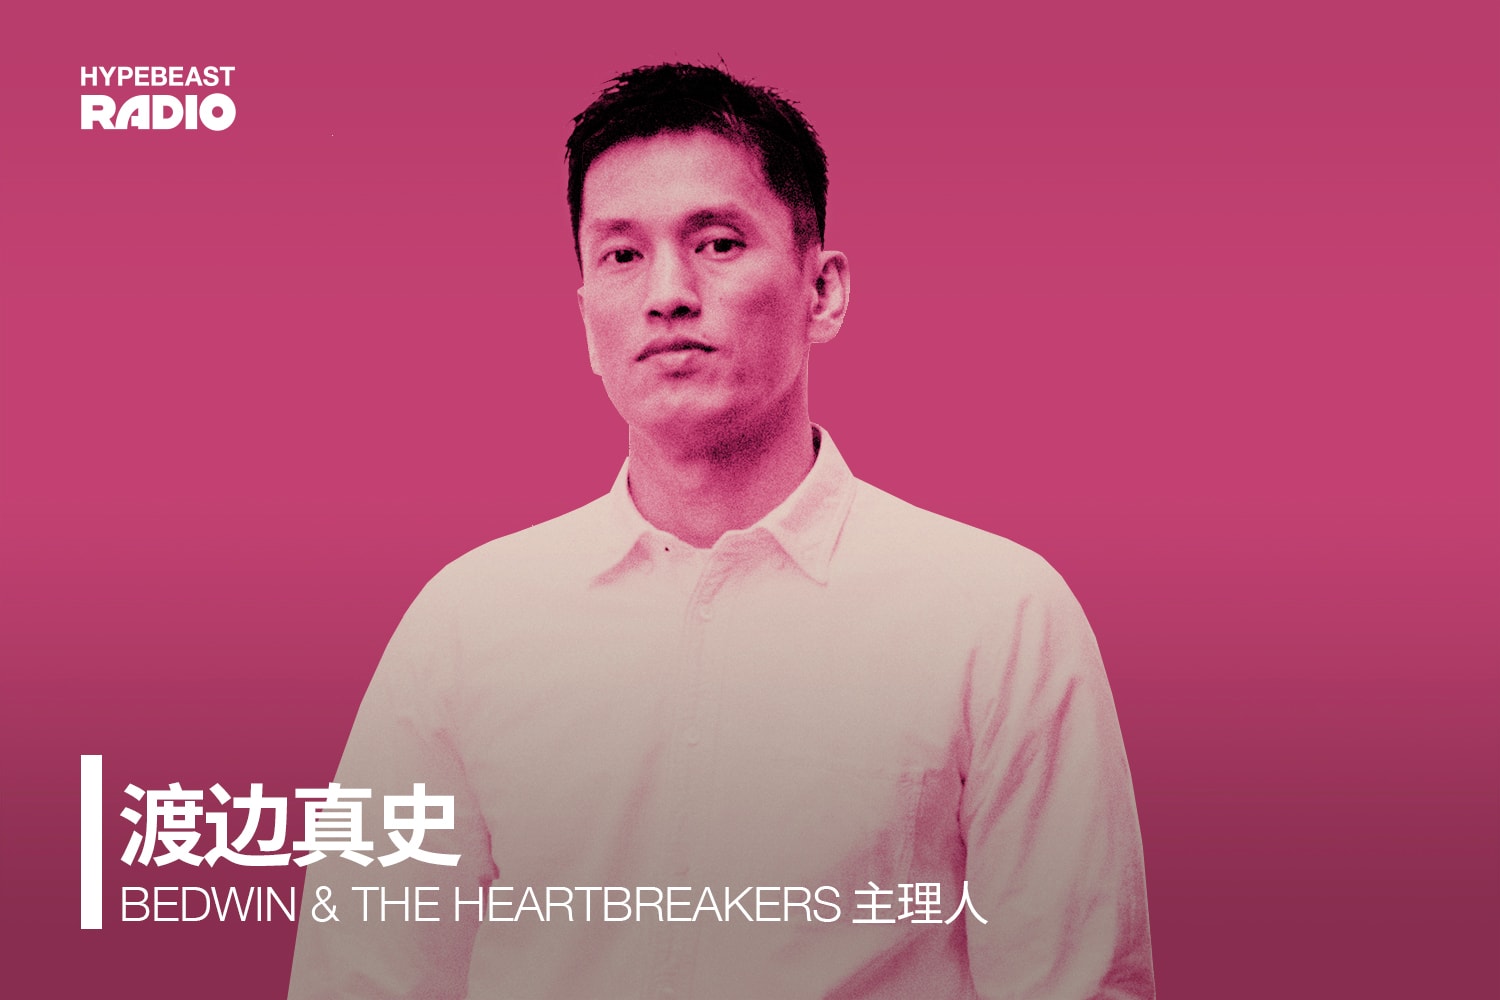 BEDWIN & THE HEARTBREAKERS 主理人渡边真史的「心碎」歌单 | HB Playlist